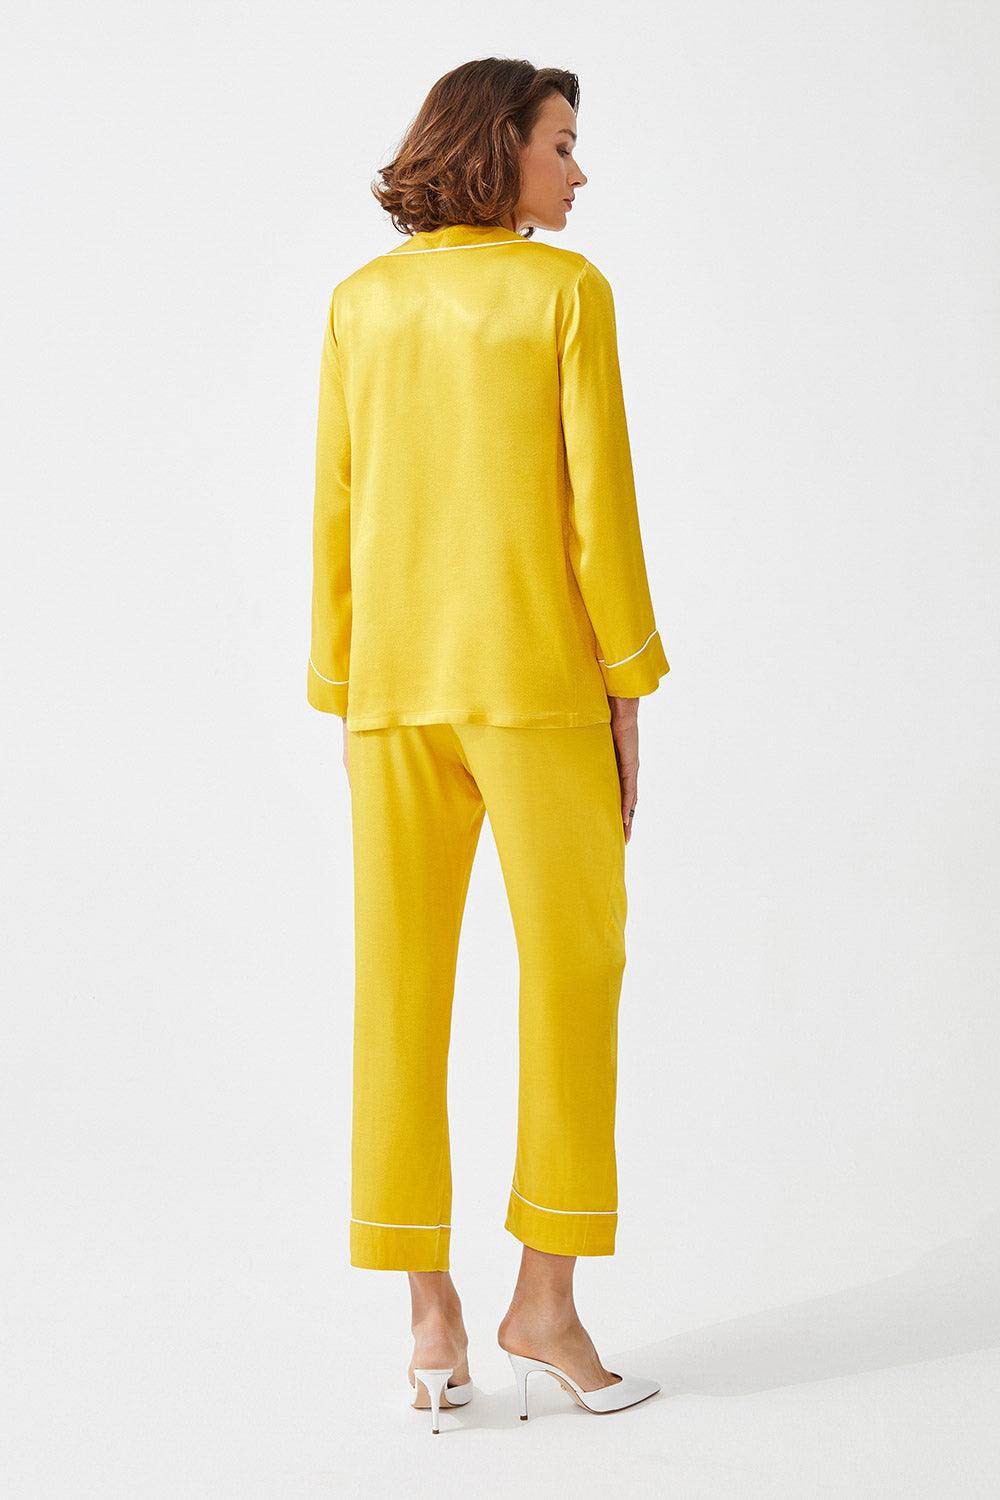 Asahi Trimmed Rayon and Buttoned Long Sleeve Pyjama Set - Yellow - Bocan